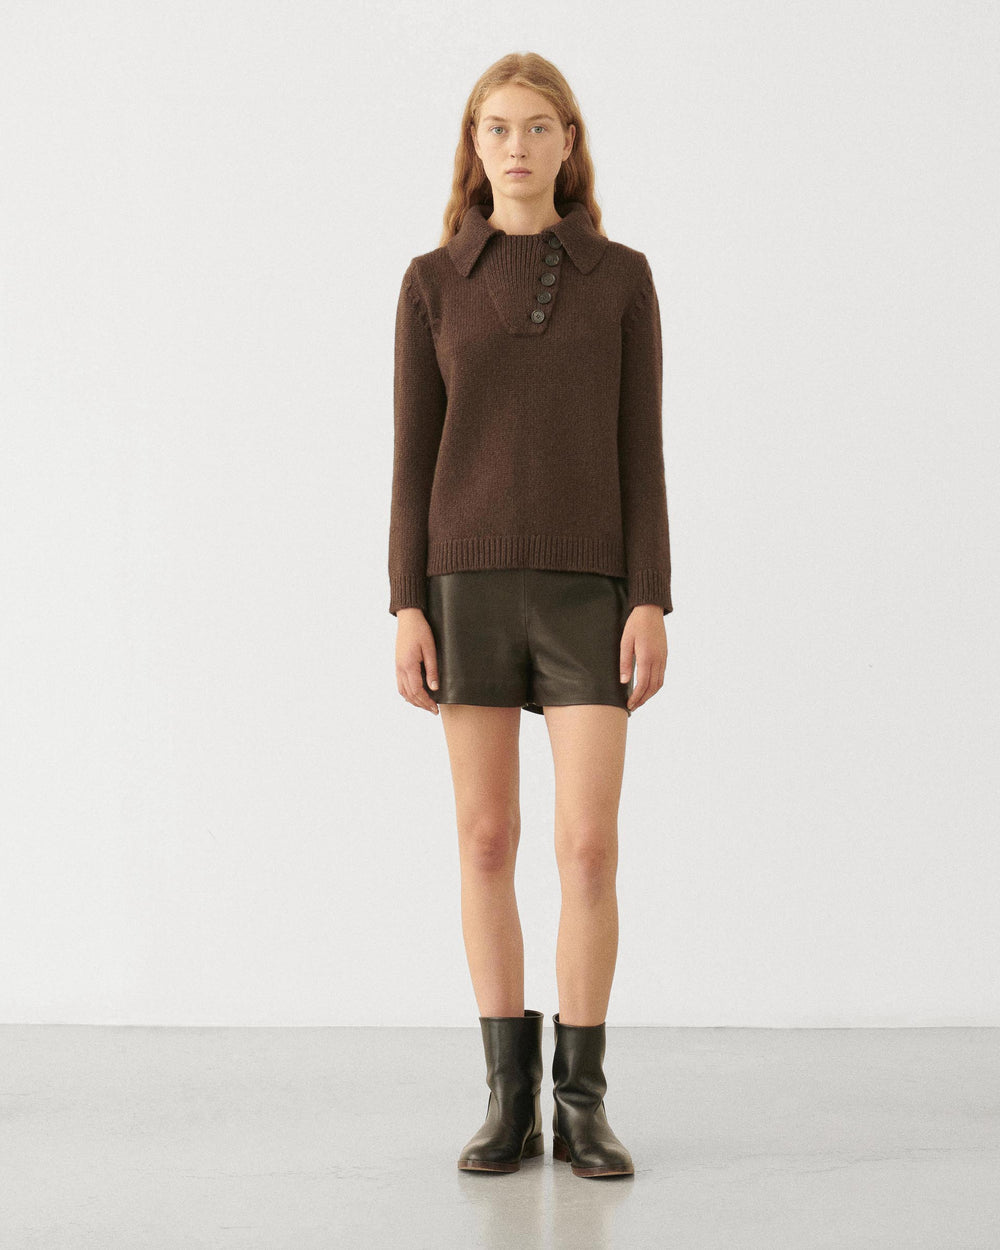 Ana Sweater in Cashmere, Chocolate